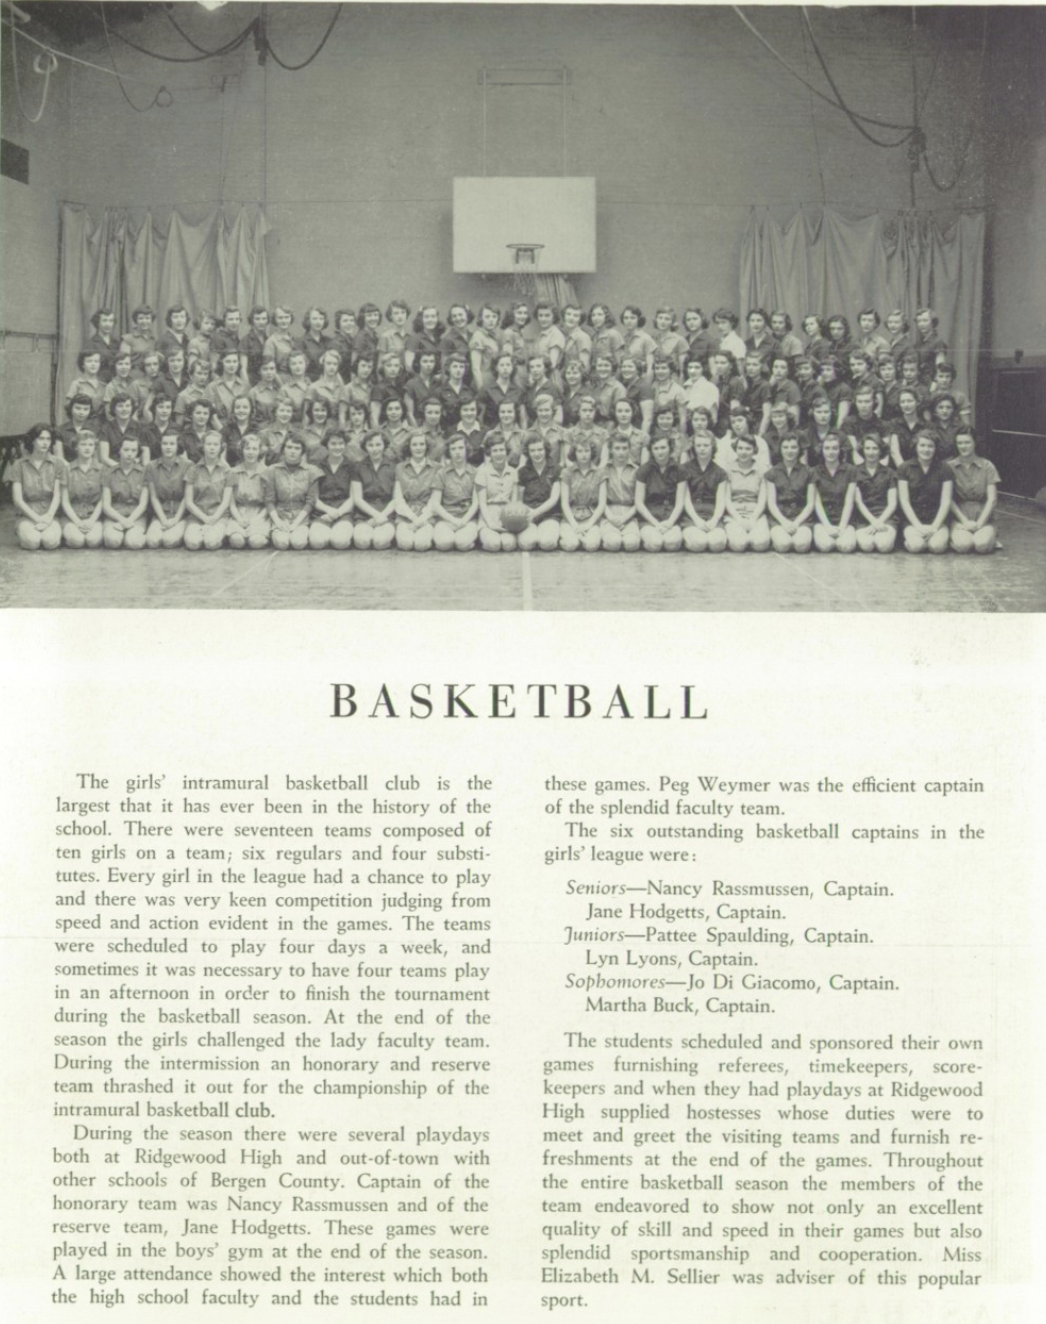 1950 Girls’ Basketball Team